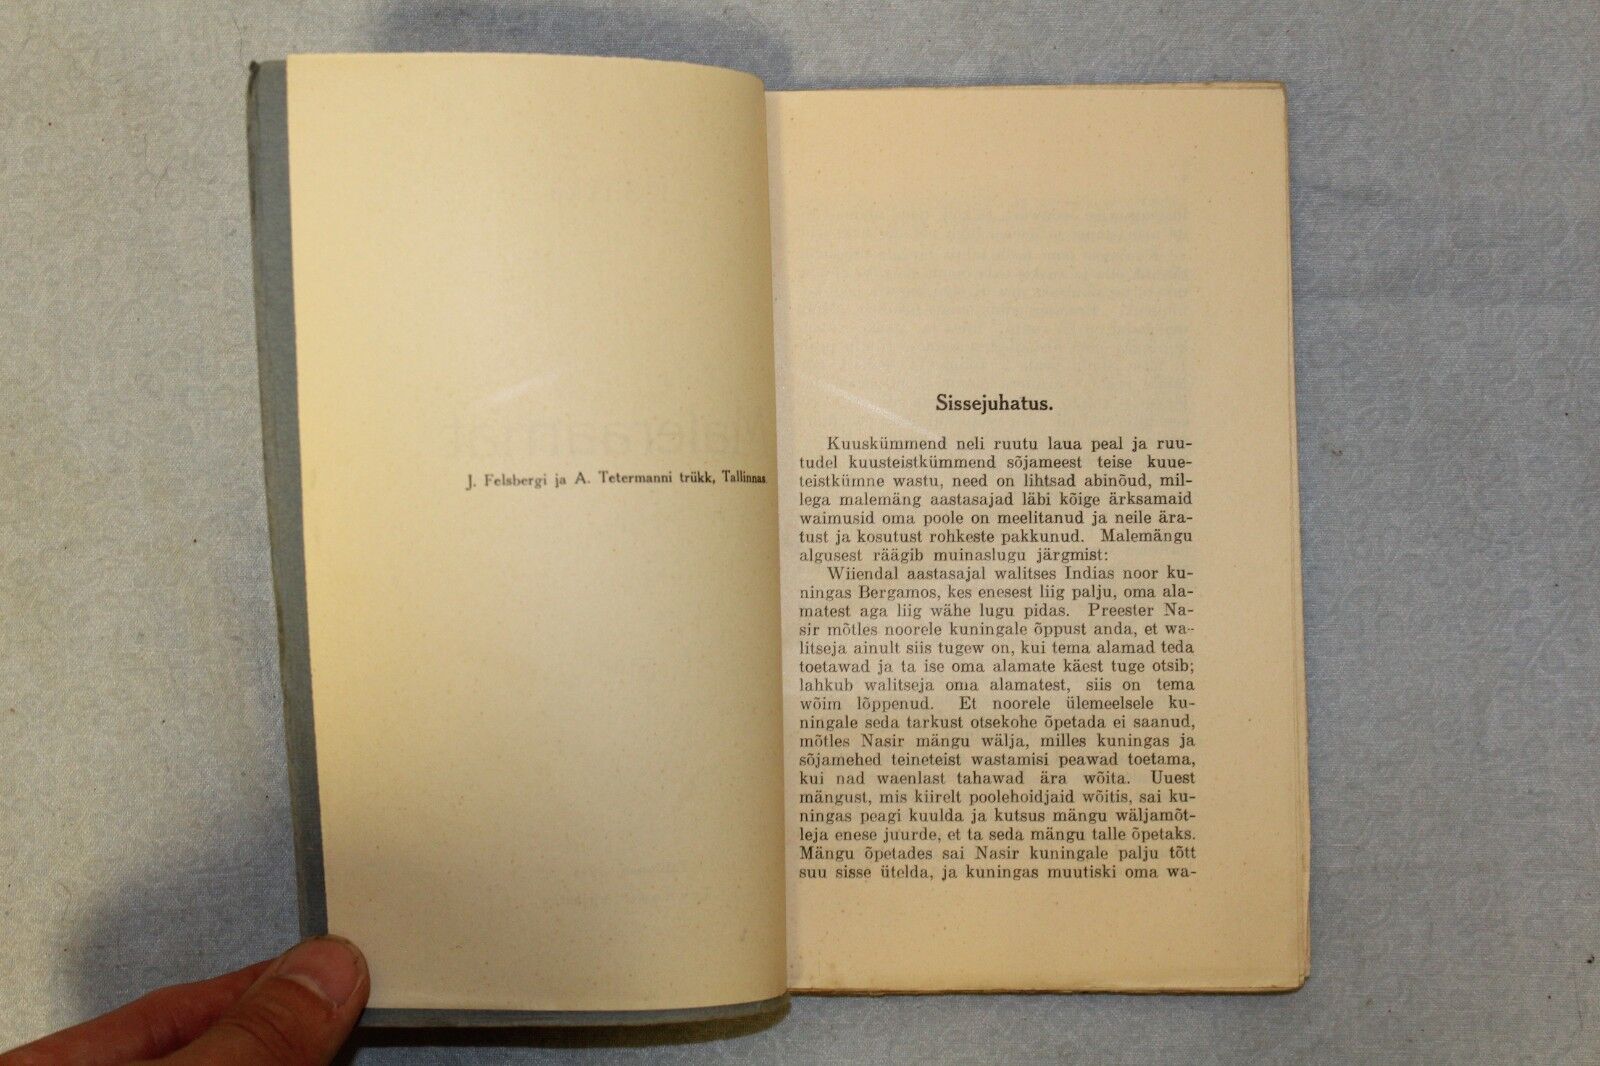 11614.Russian-Estonian Chess Book:Sitska. Book on Chess.1914.№77 in Sakharov Cataloque